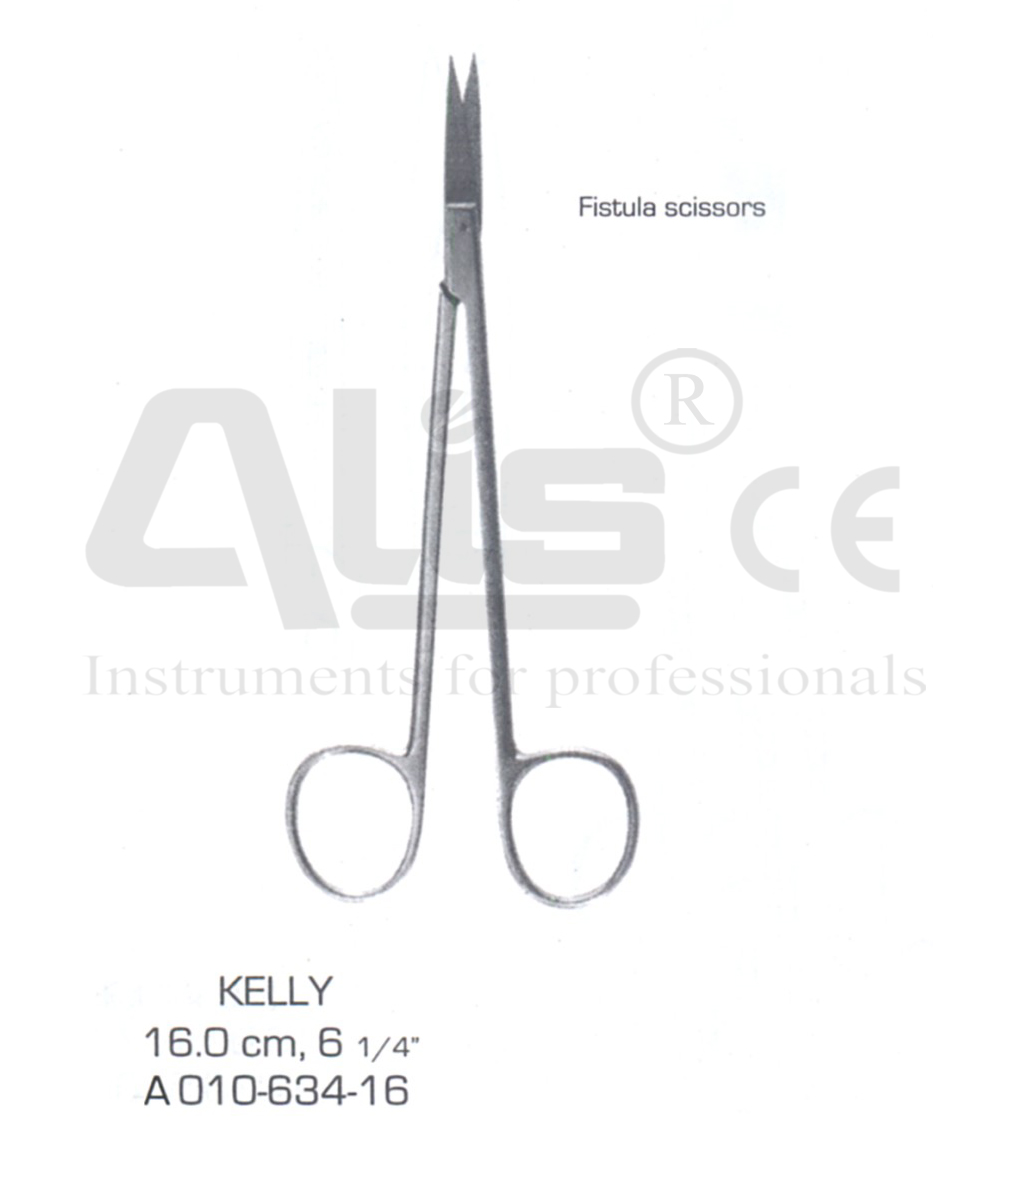 Kelly Gynaecology Scissors